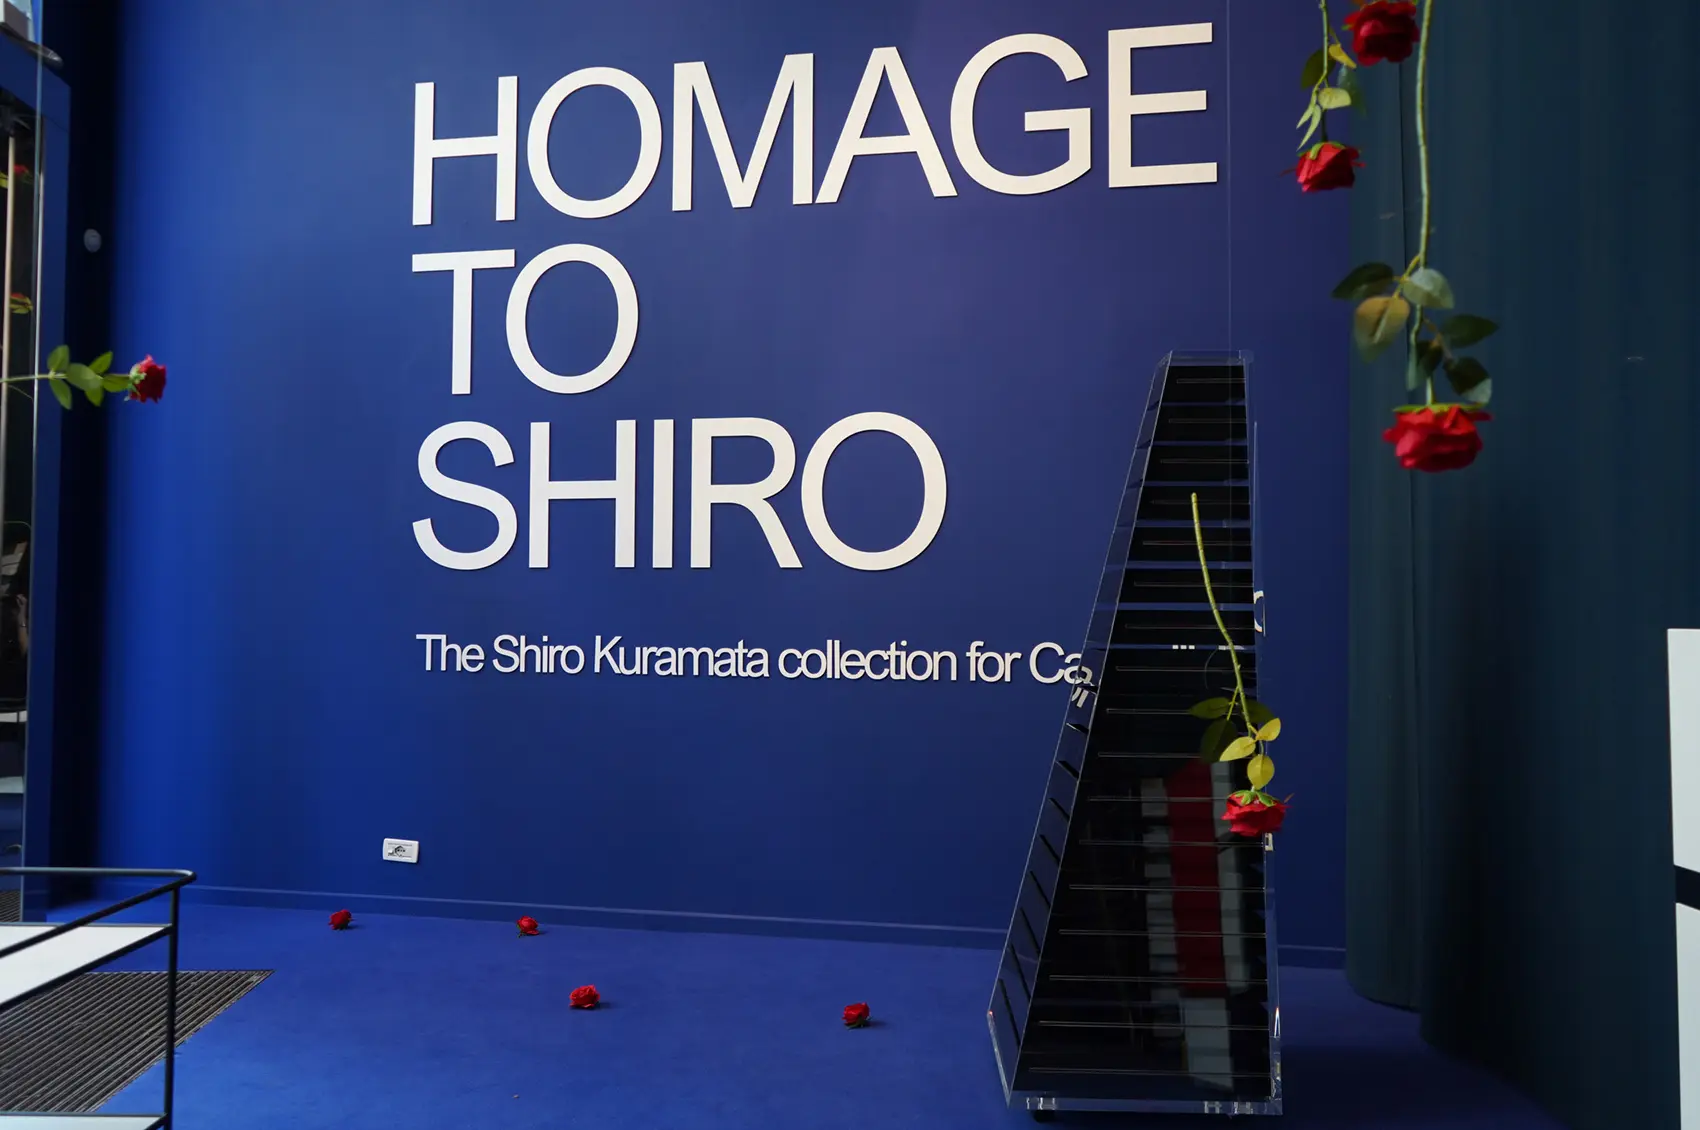 "HOMAGE TO SHIRO" The Shiro Kuramata collection for Cappellini photo by IL DESIGN